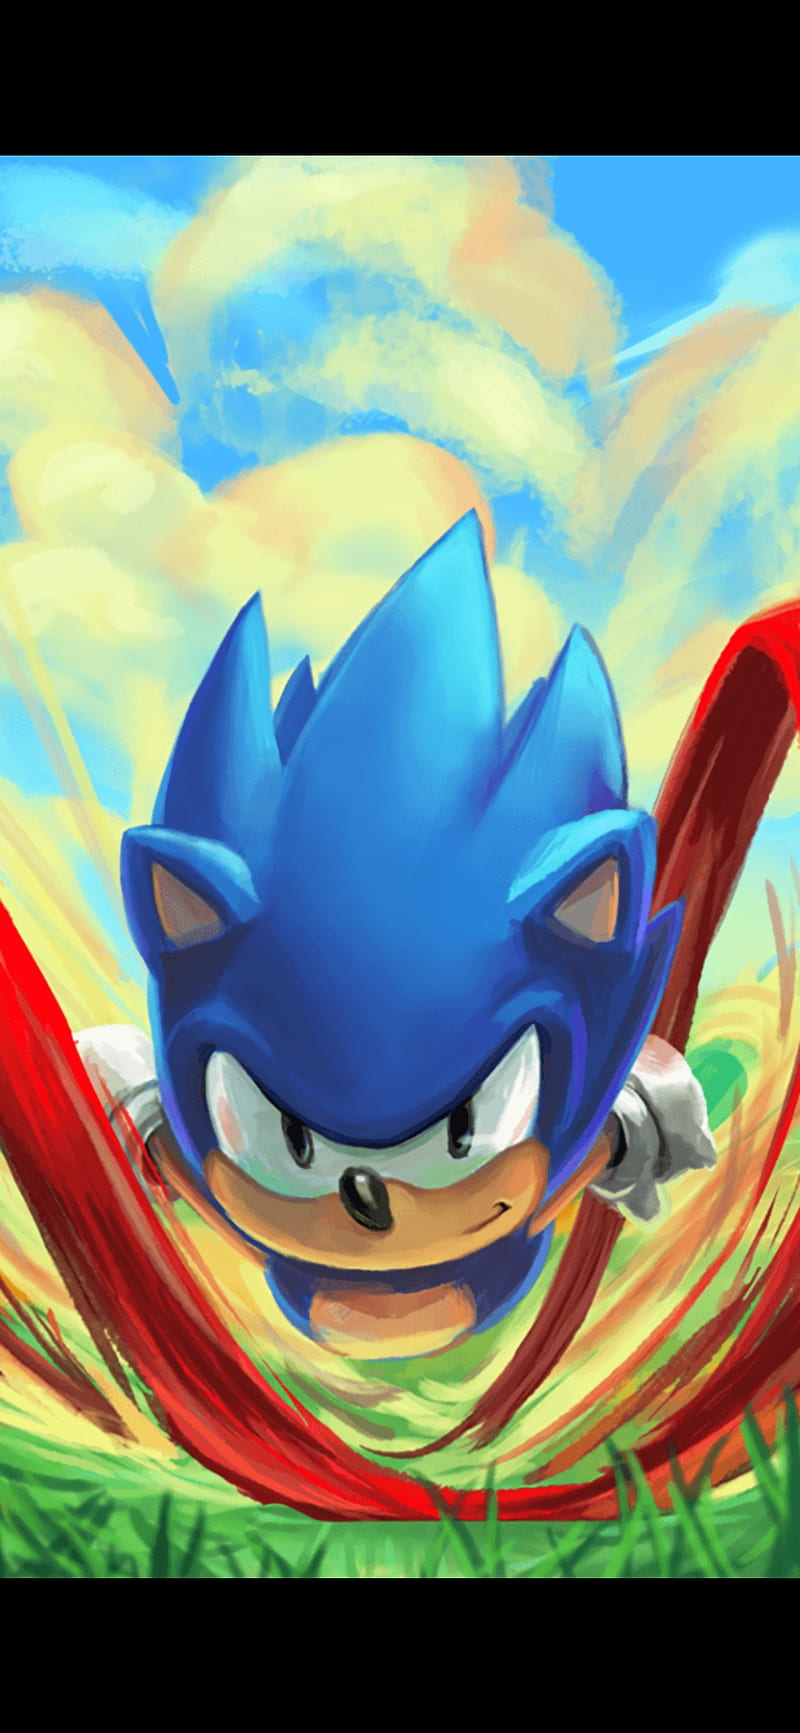 Download Sonic The Hedgehog in Joyful Acceleration Wallpaper  Wallpapers com